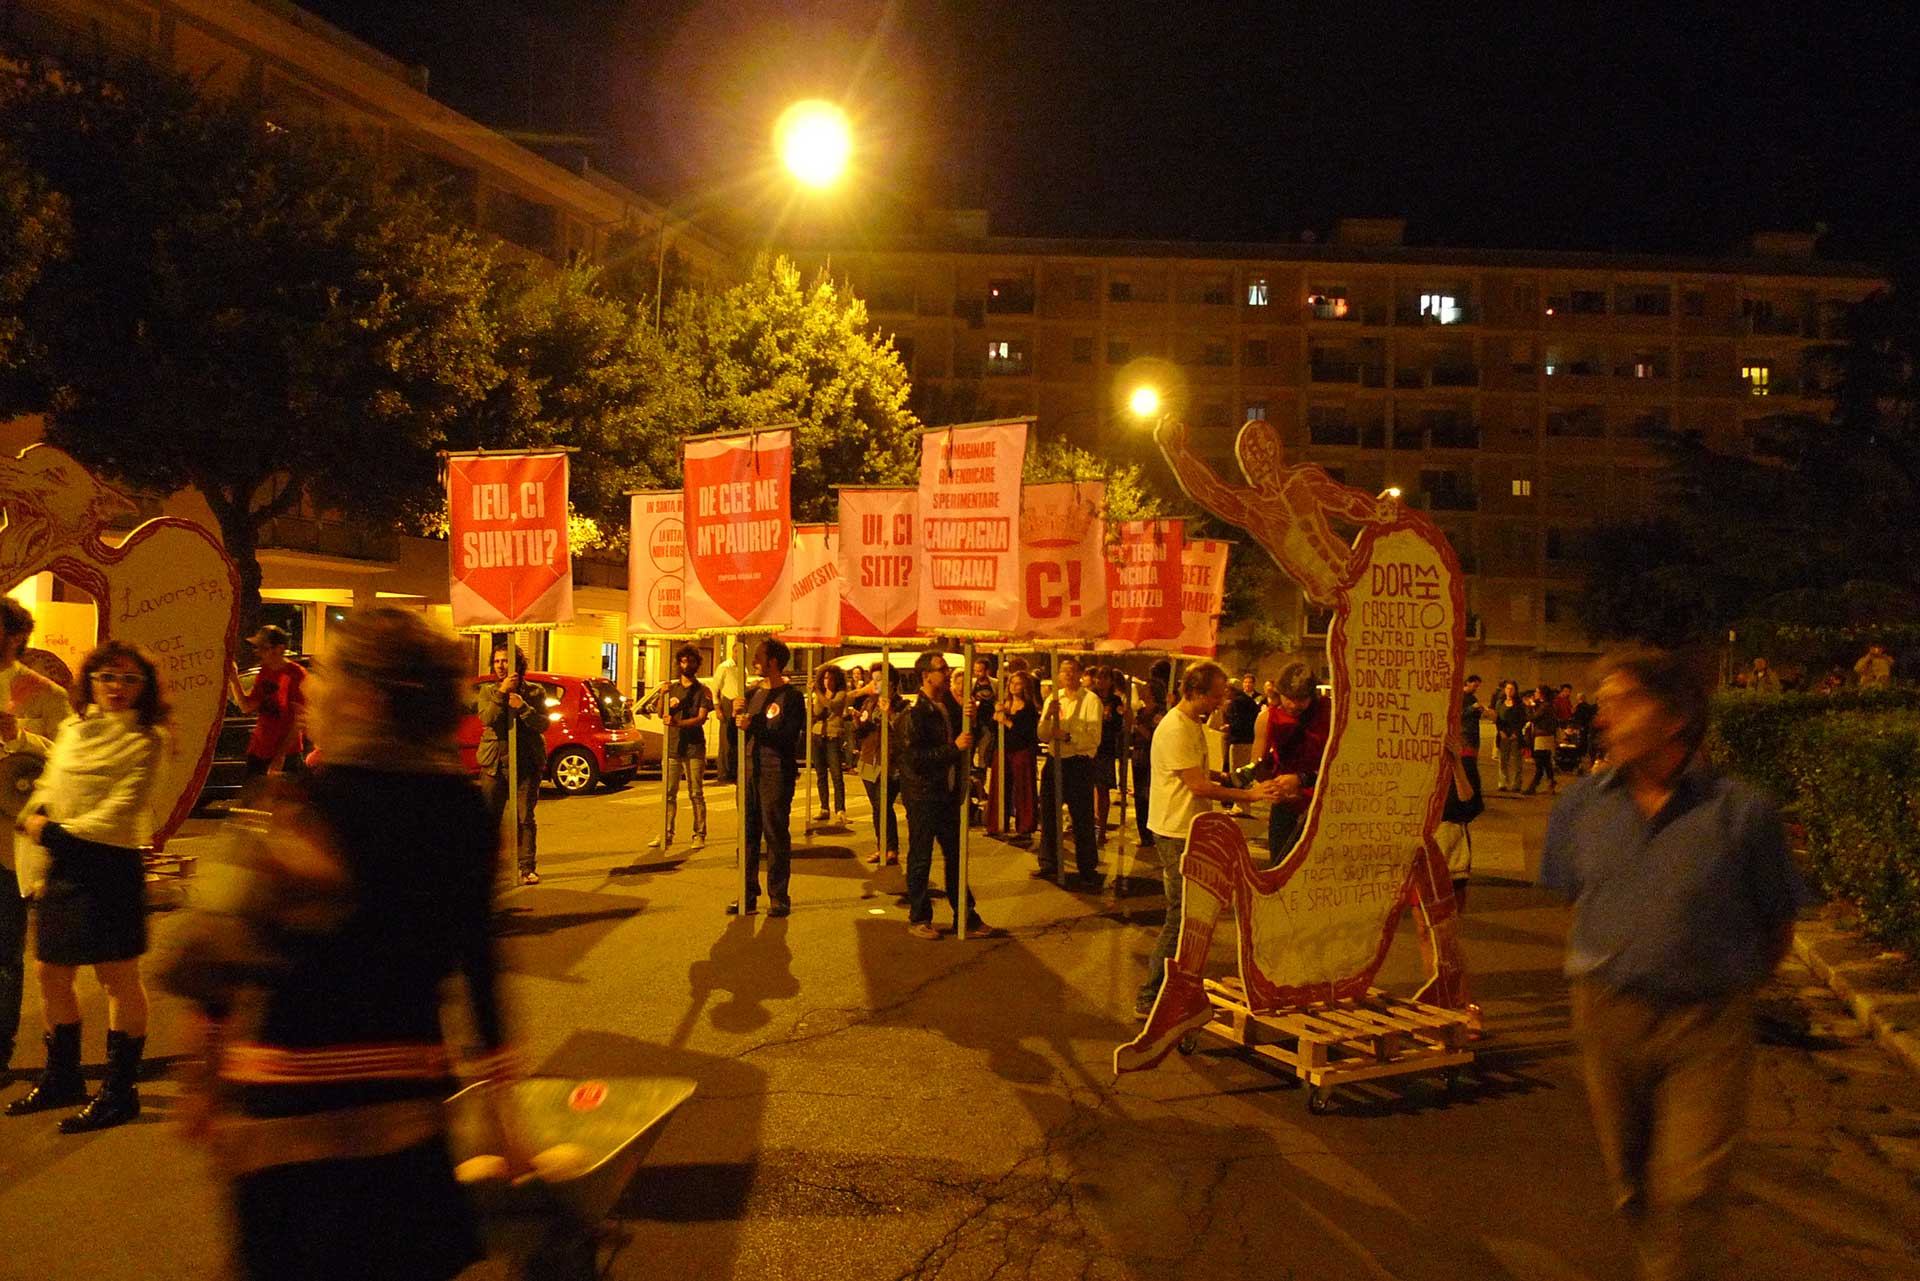 Street demonstration at night